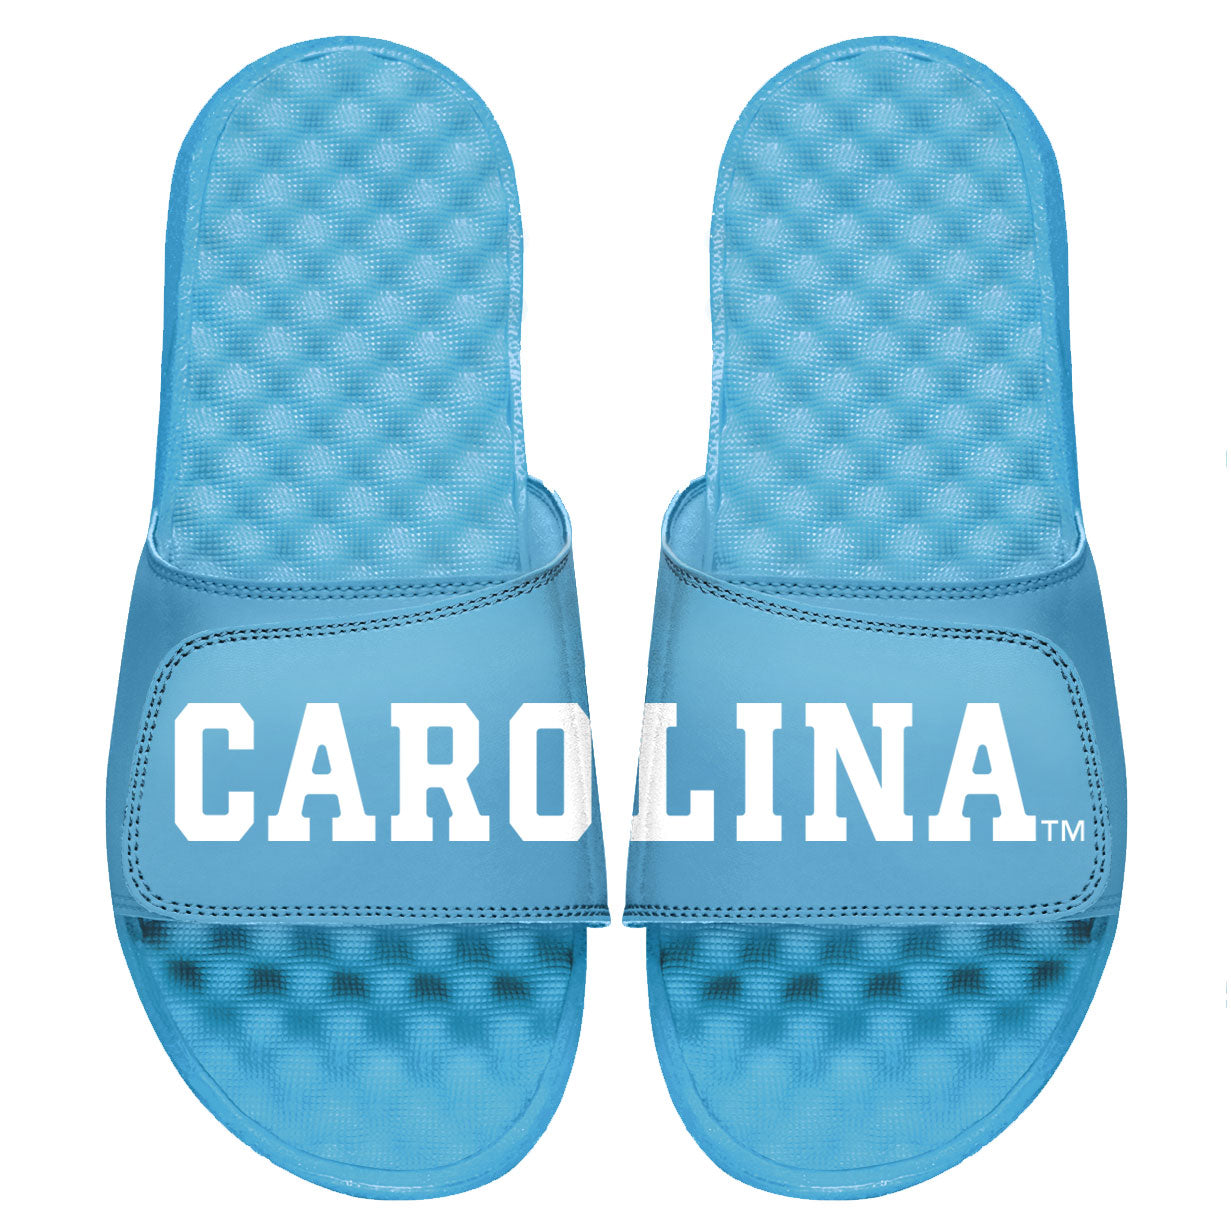 UNC Carolina Split Slides